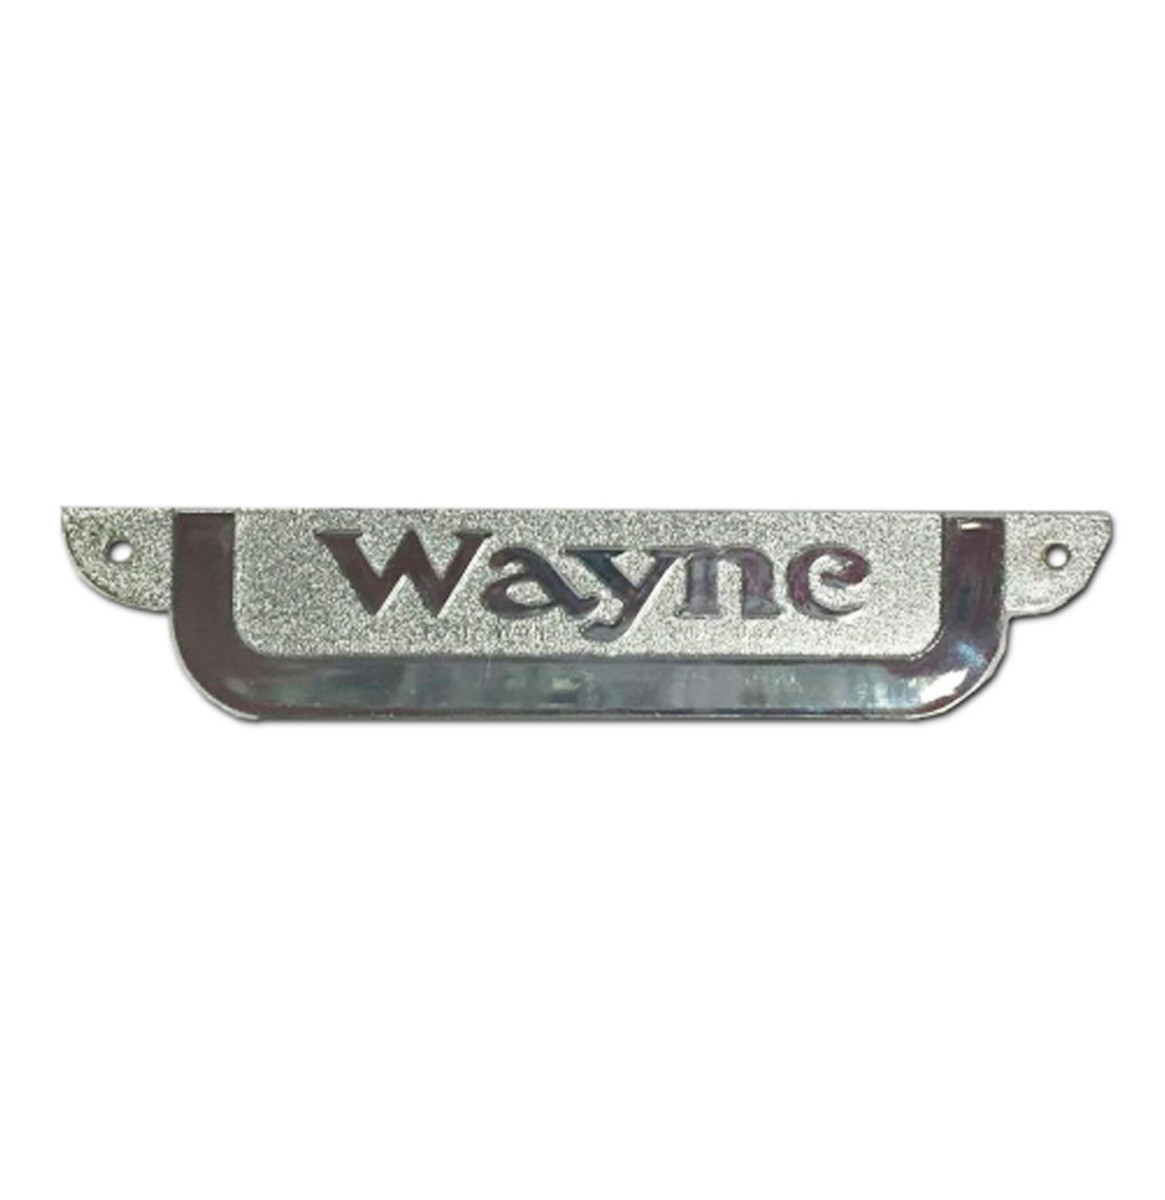 Wayne 70 Naamplaatje Chroom PVC